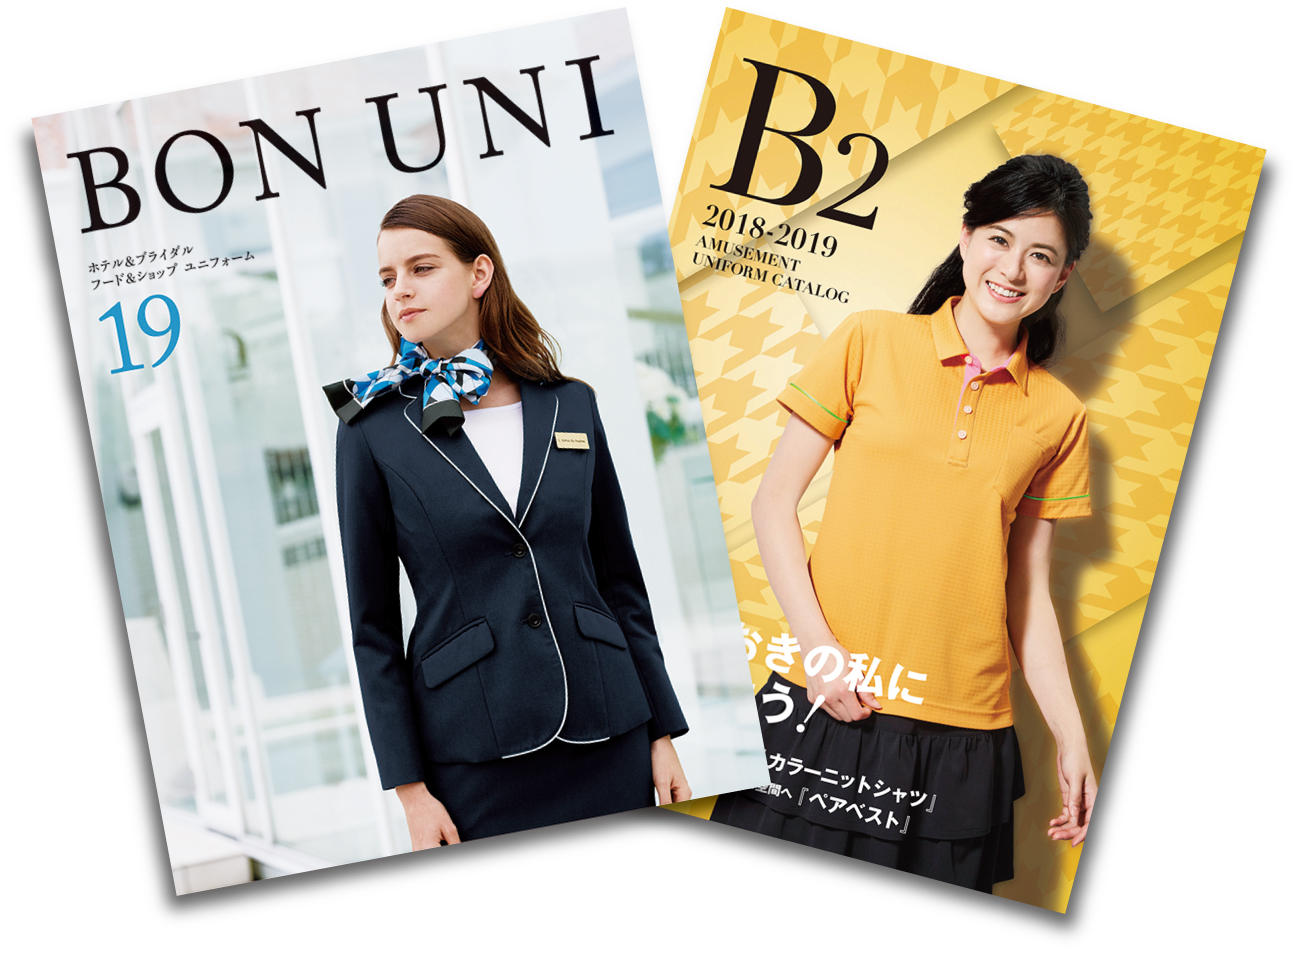 Bon-Uni, B2 new digital catalogues